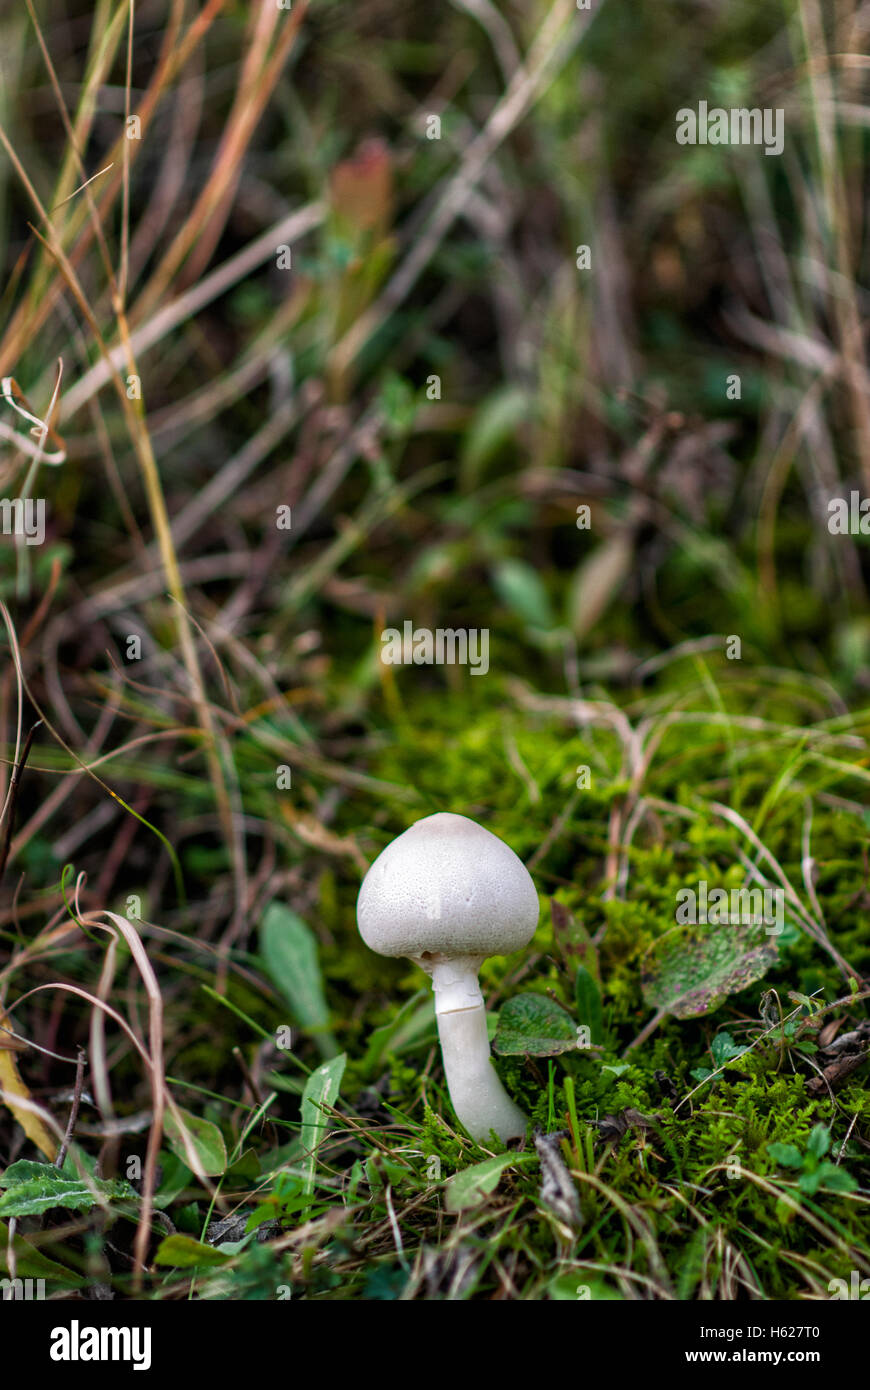 Fresh mushroom growing in the grass Stock Photo